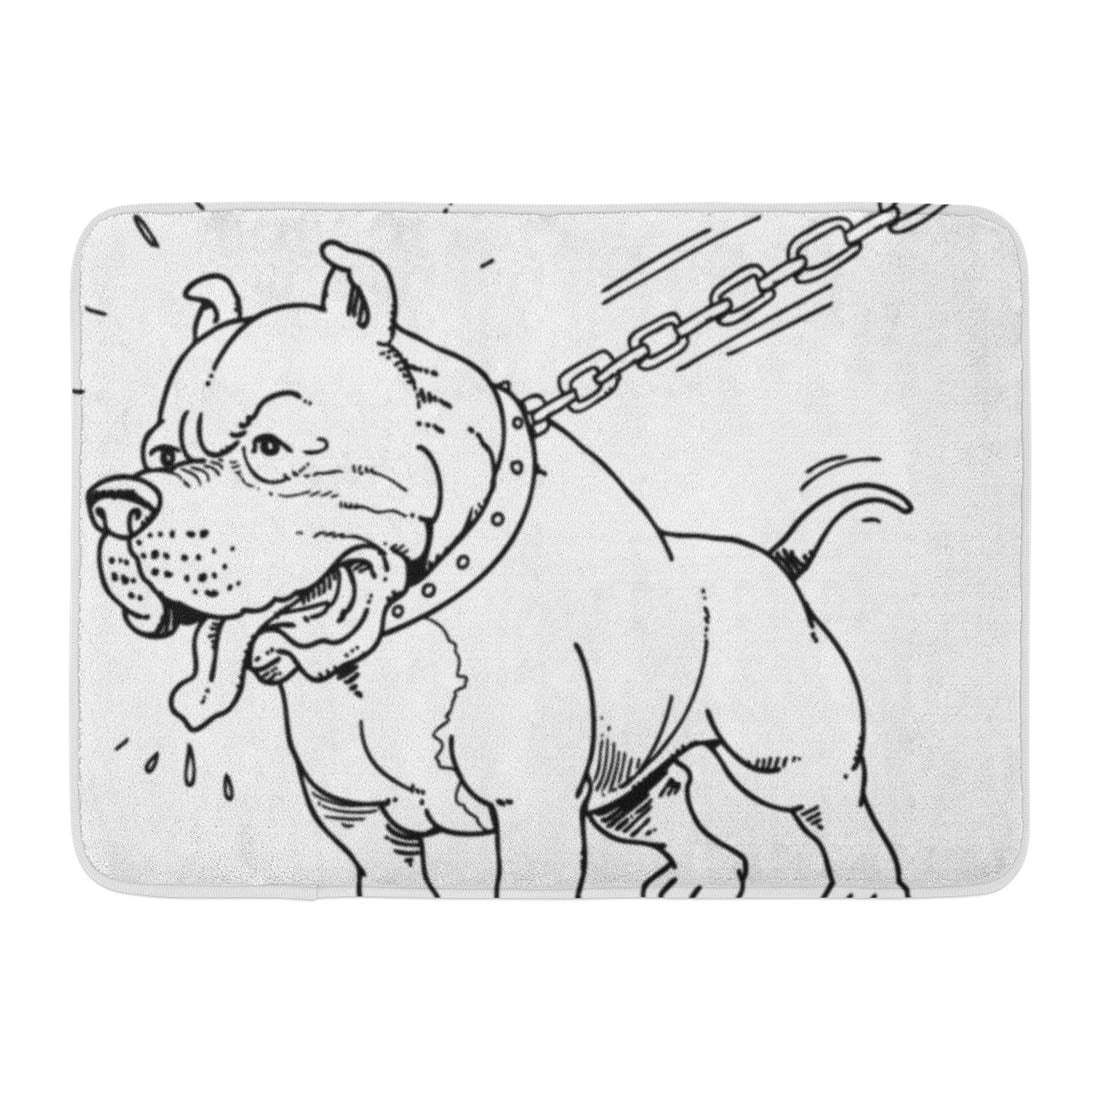 GODPOK Cartoon Black American Draw of Angry Pit Bull White Animal Character  Rug Doormat Bath Mat  inch 